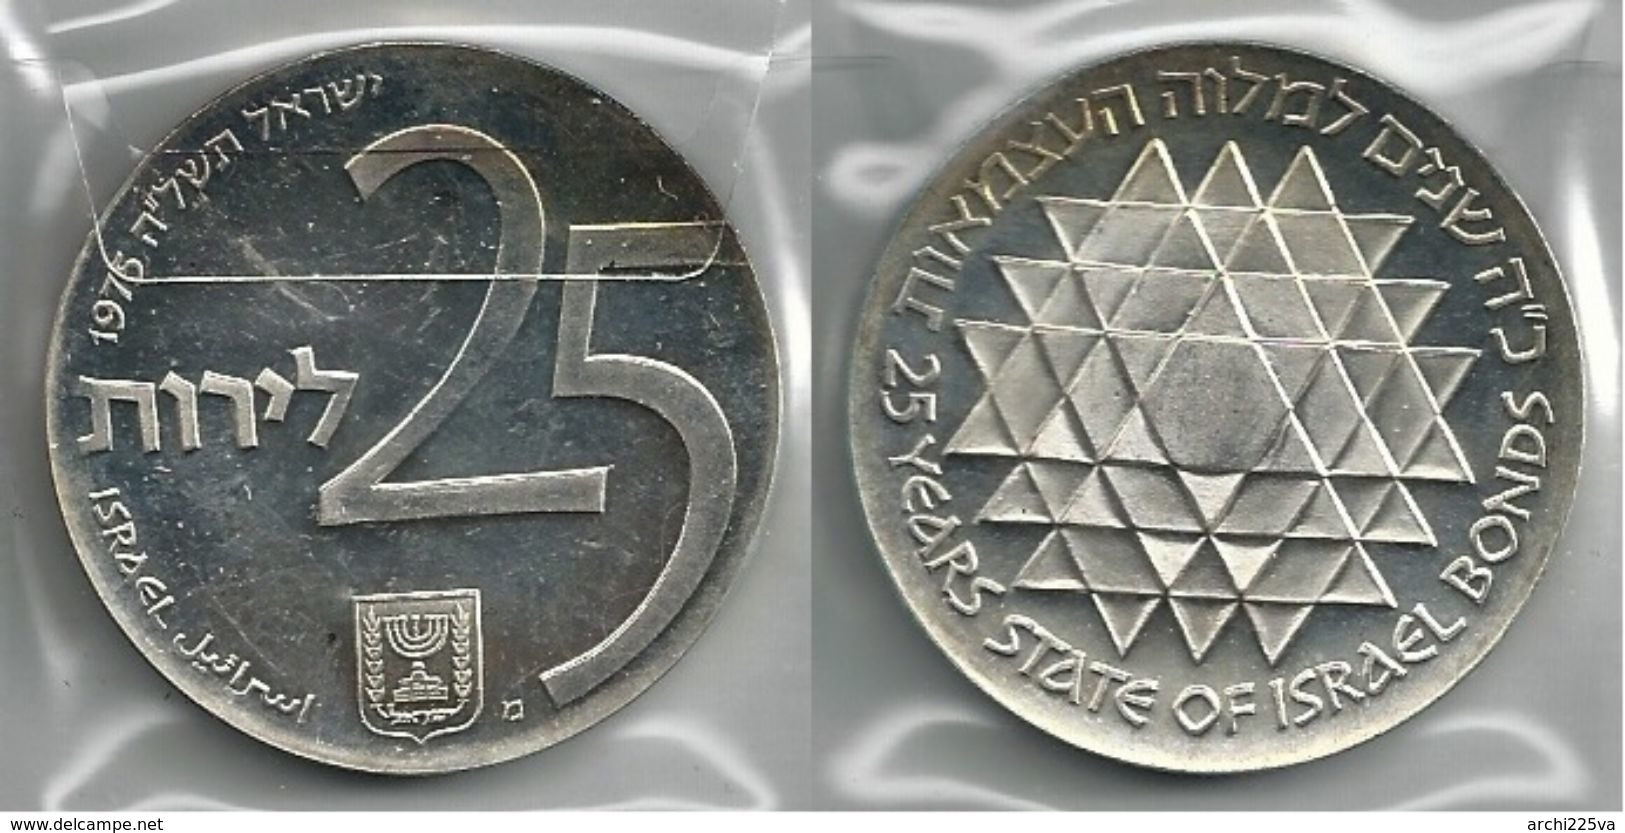 ISRAELE 1975 - 25 IL. SPL / FDC Proof - Argento / Argent / Silver 800 / 000 - Bustina Semplice - Israele